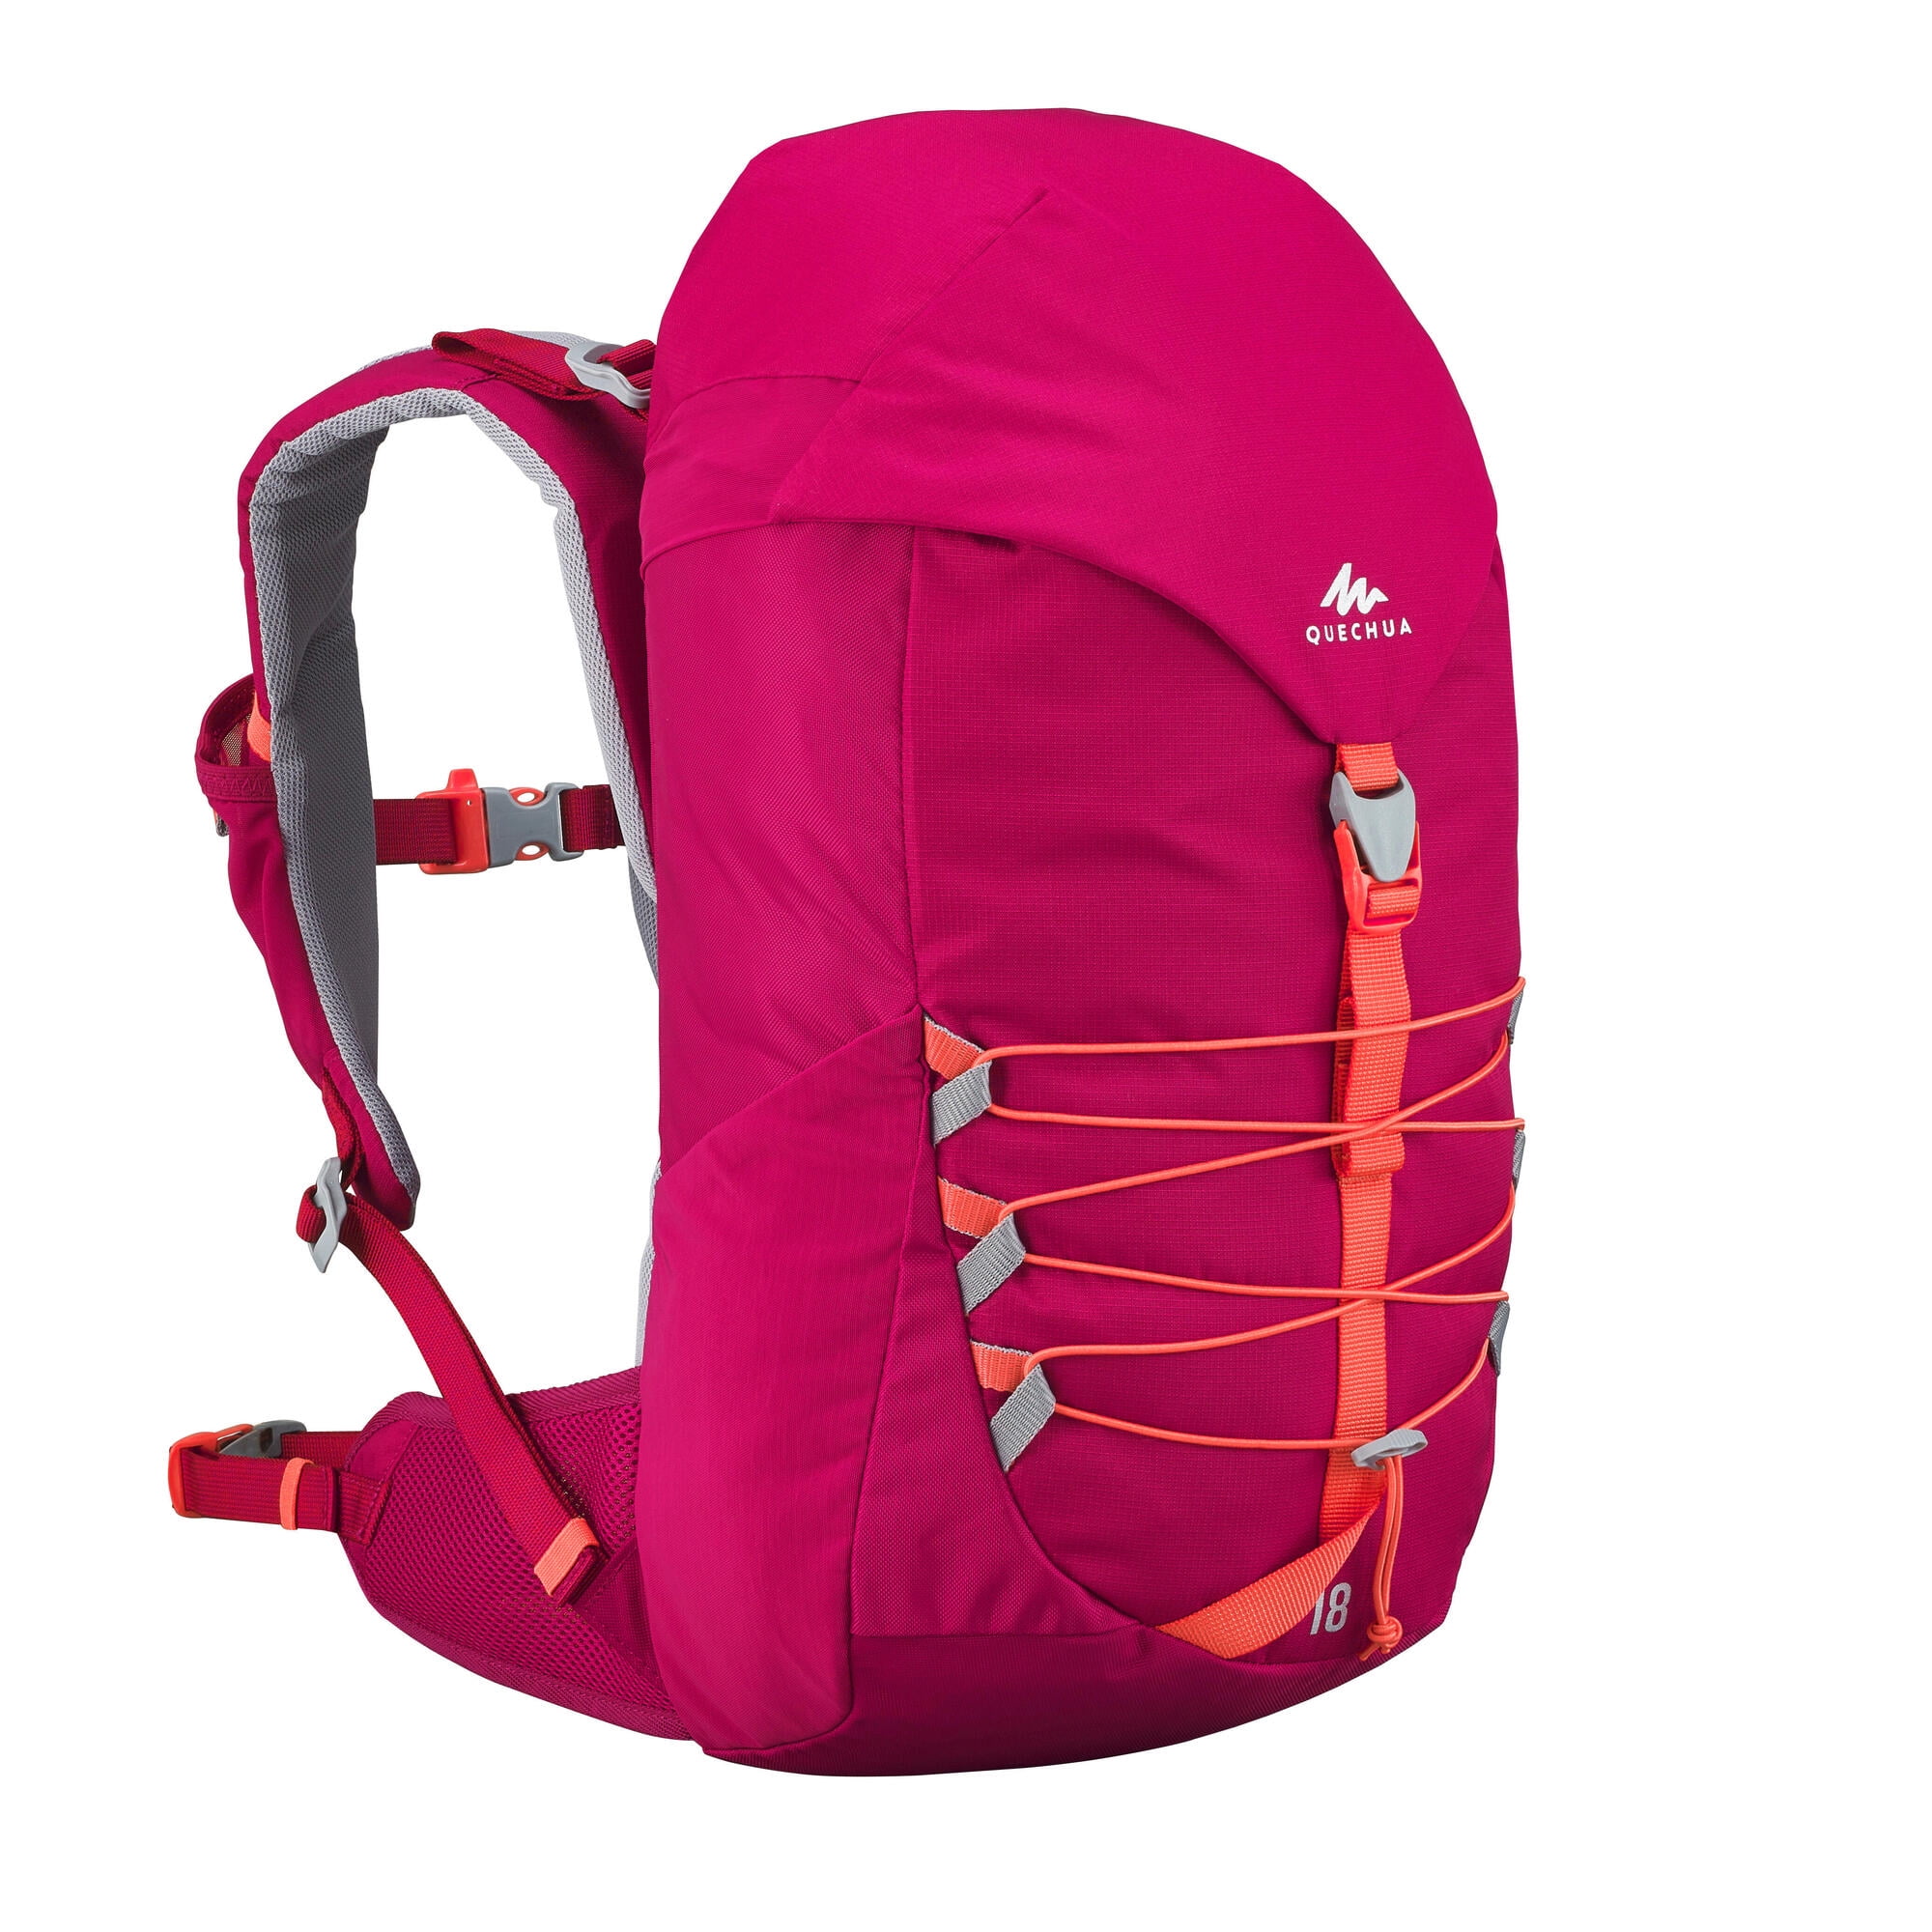 Decathlon Quechua MH500, Kids' Backpack, - Walmart.com